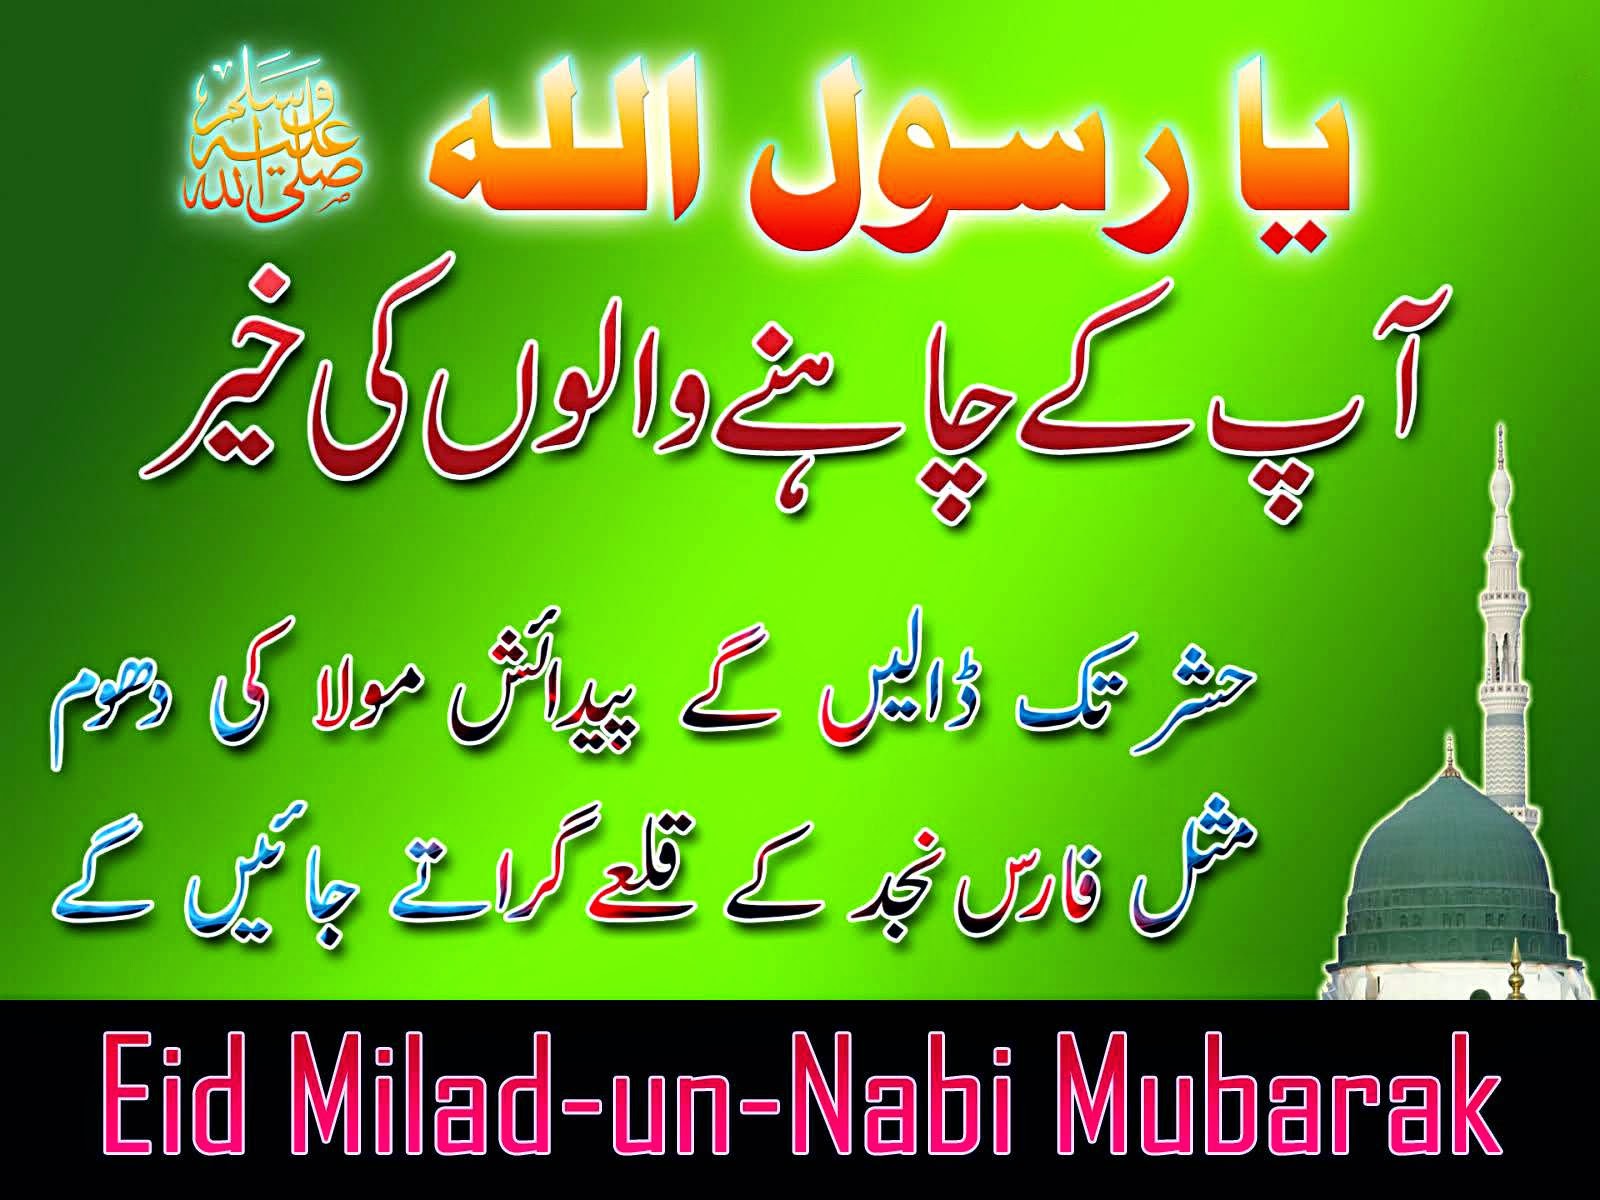 Happy Greetings For Eid Milad Un Nabi Mubarak 2016 - Eid Milad Un Nabi Mubarak Ho , HD Wallpaper & Backgrounds